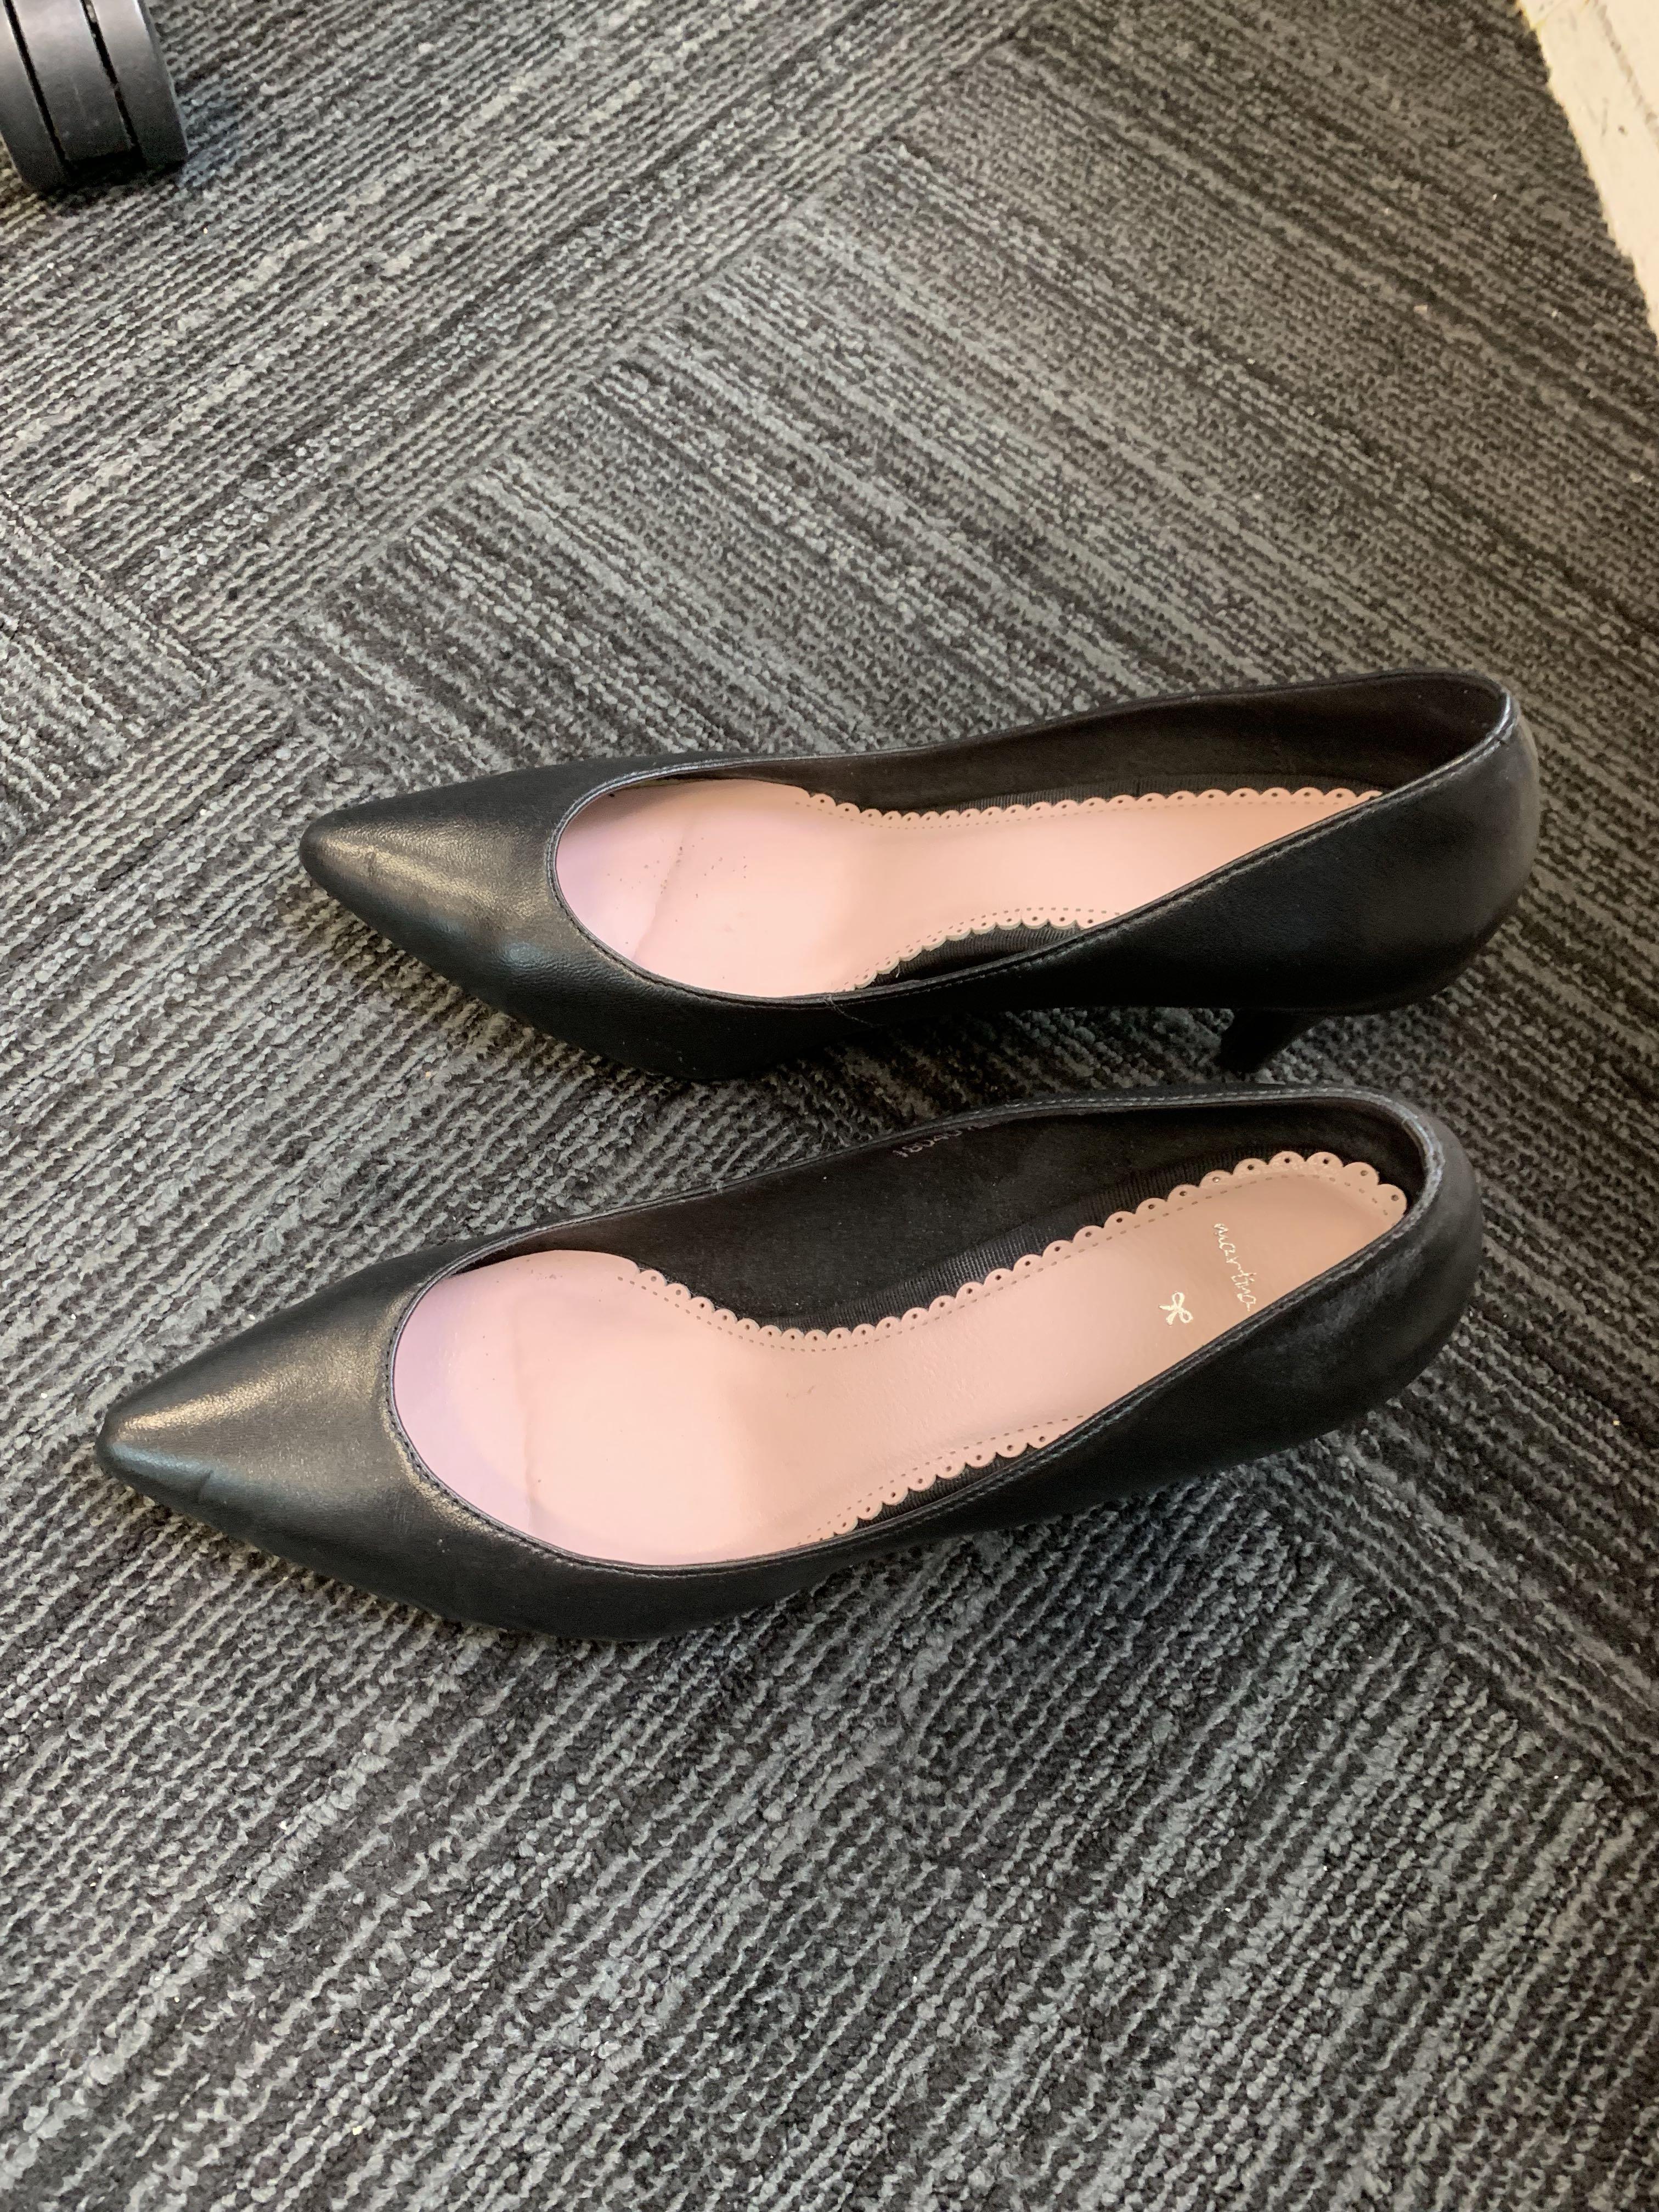 martina pink heels